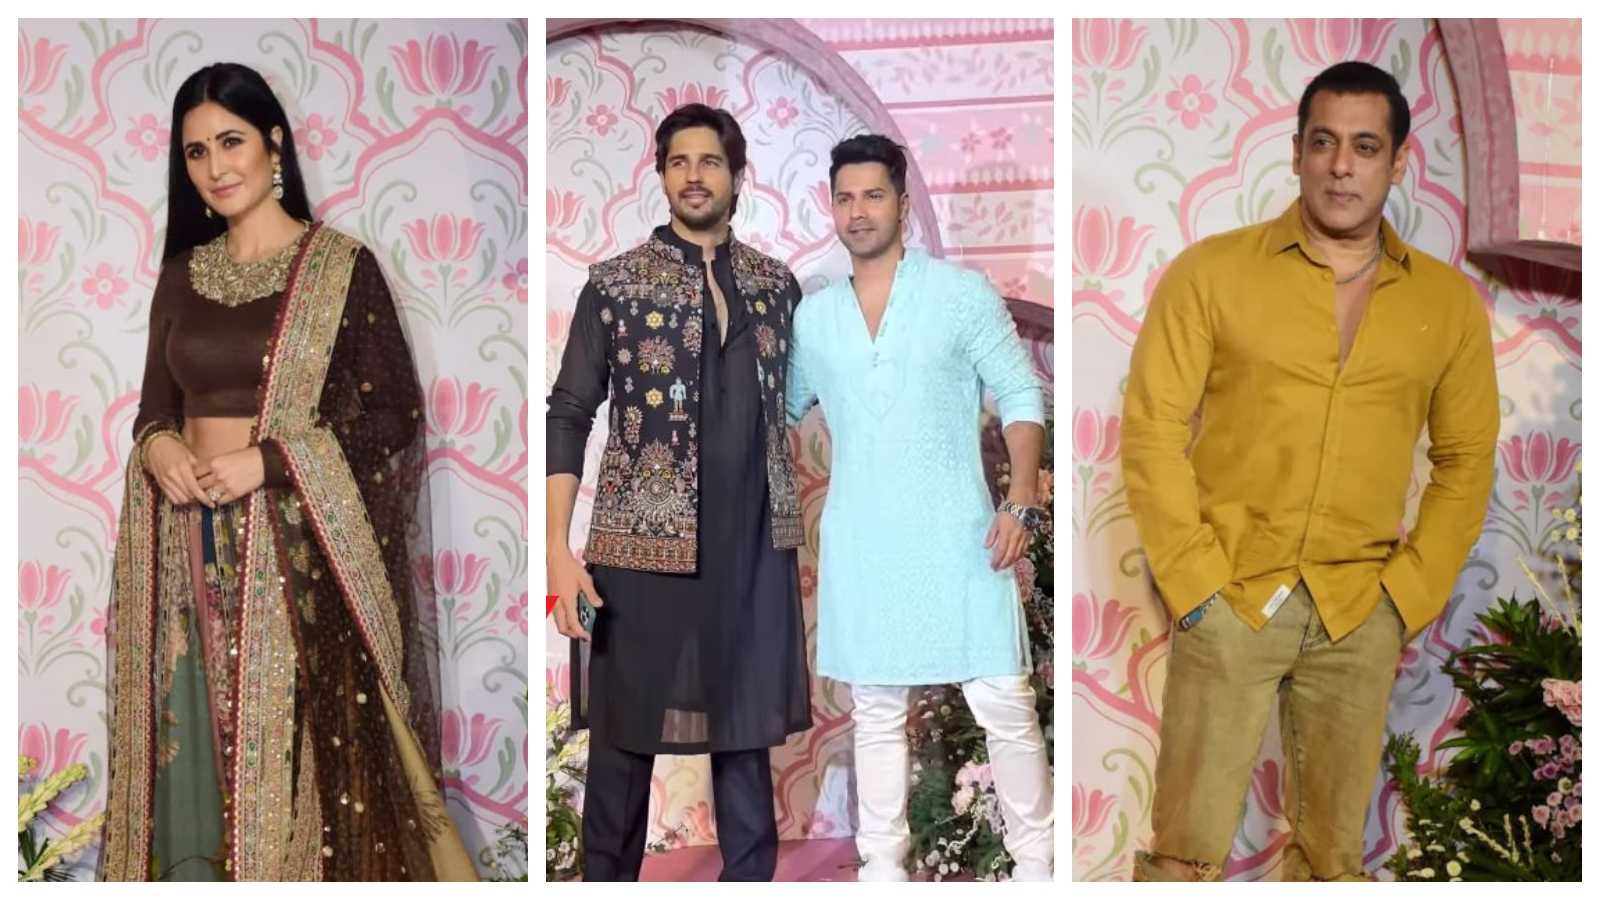 Salman Khan, Katrina Kaif arrive in style; Sidharth Malhotra & Varun Dhawan have SOTY reunion at Ramesh Taurani's Diwali bash